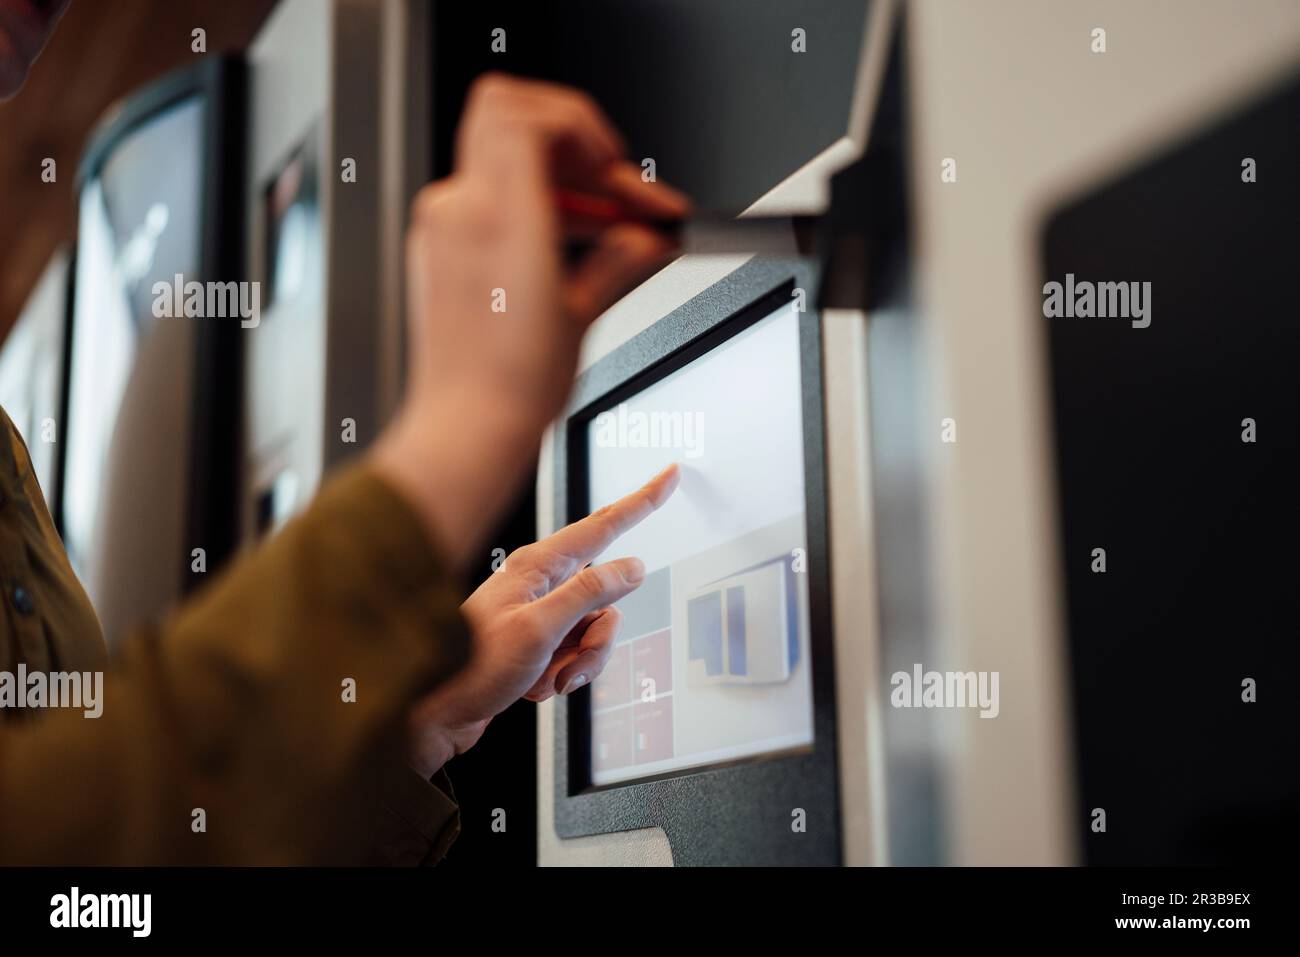 Woman touching screen of ATM machine Stock Photo